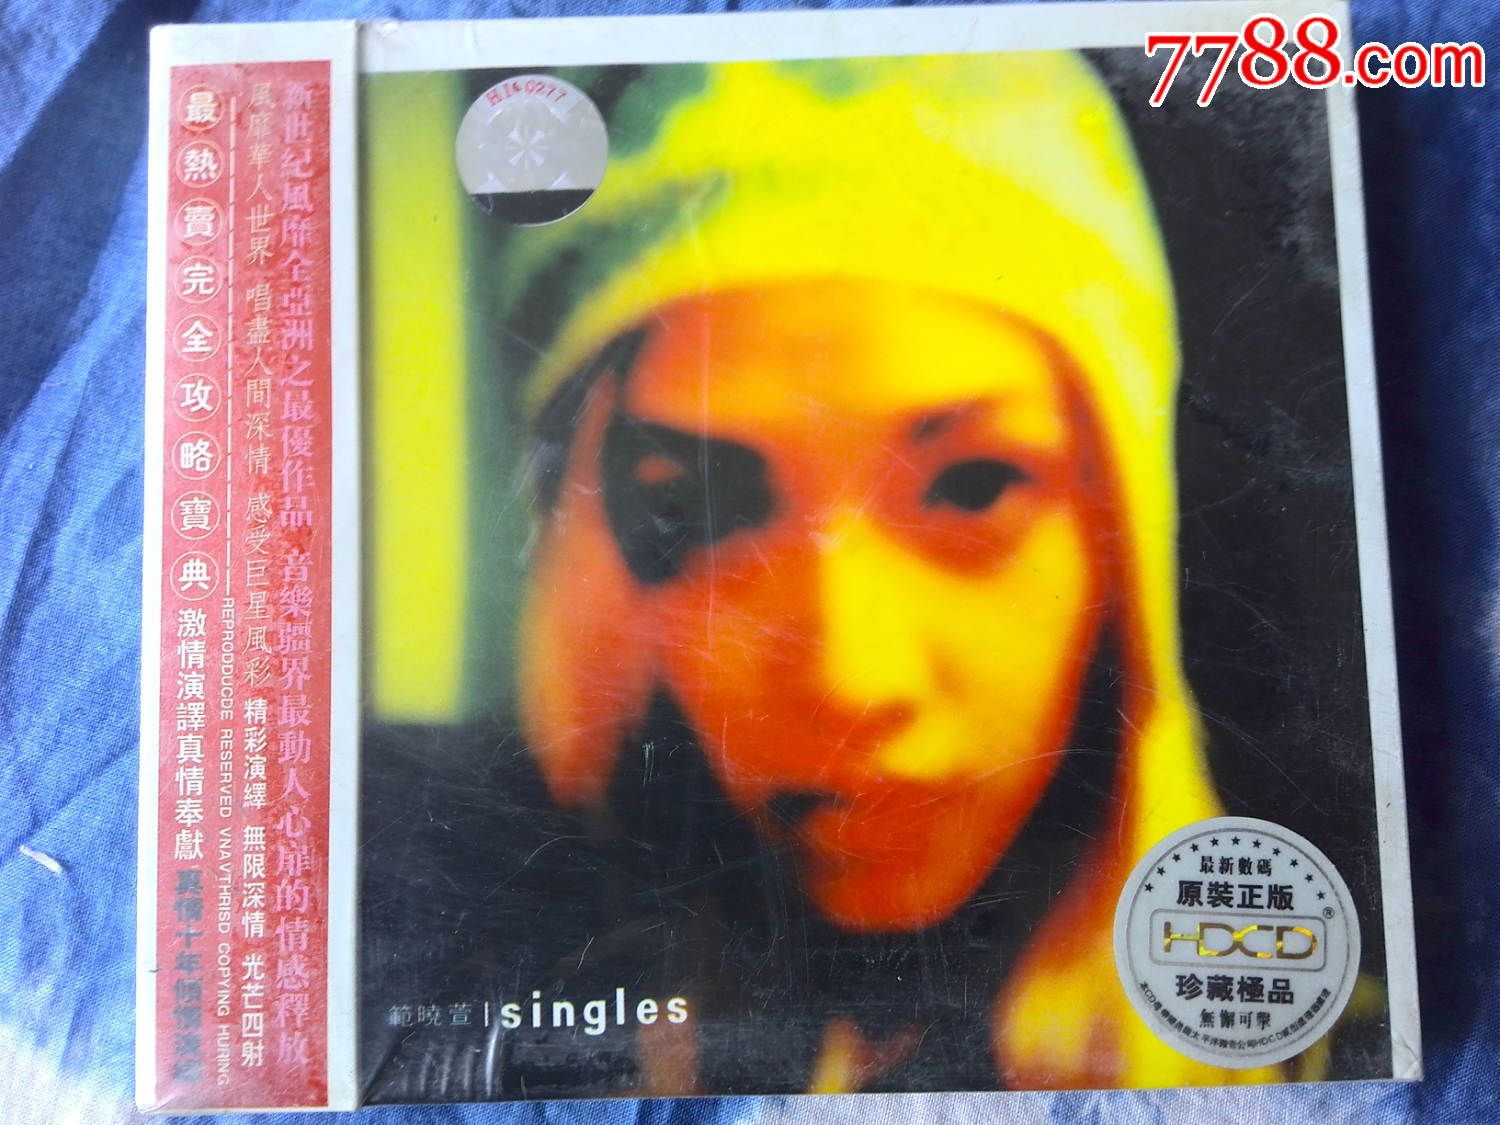 Singles(范曉萱音樂EP)